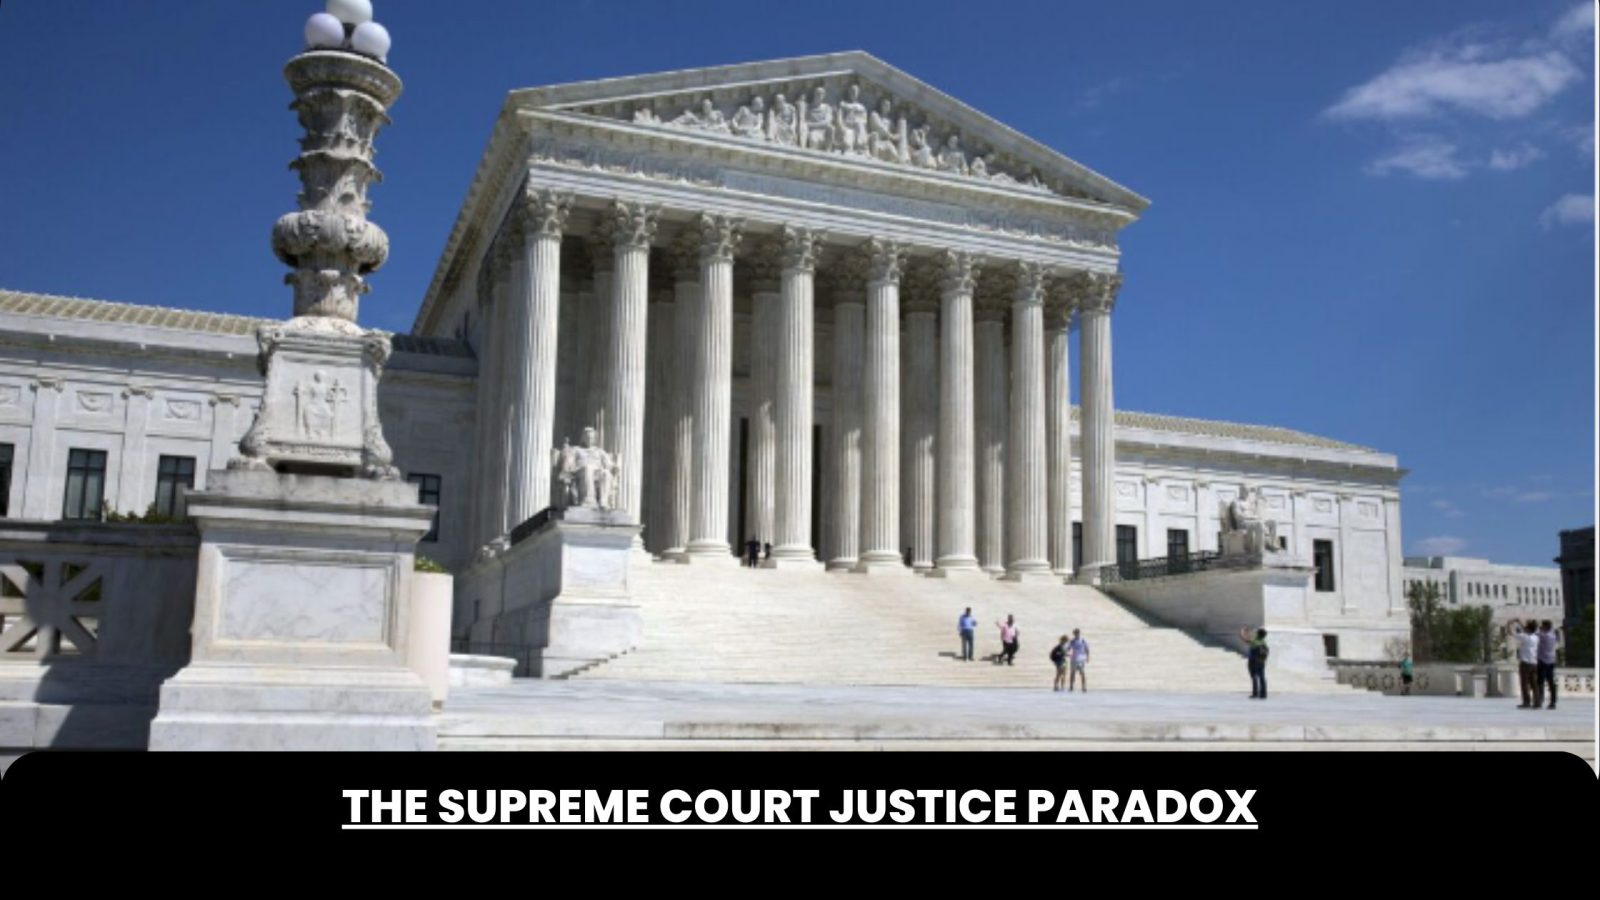 The Supreme Court Justice